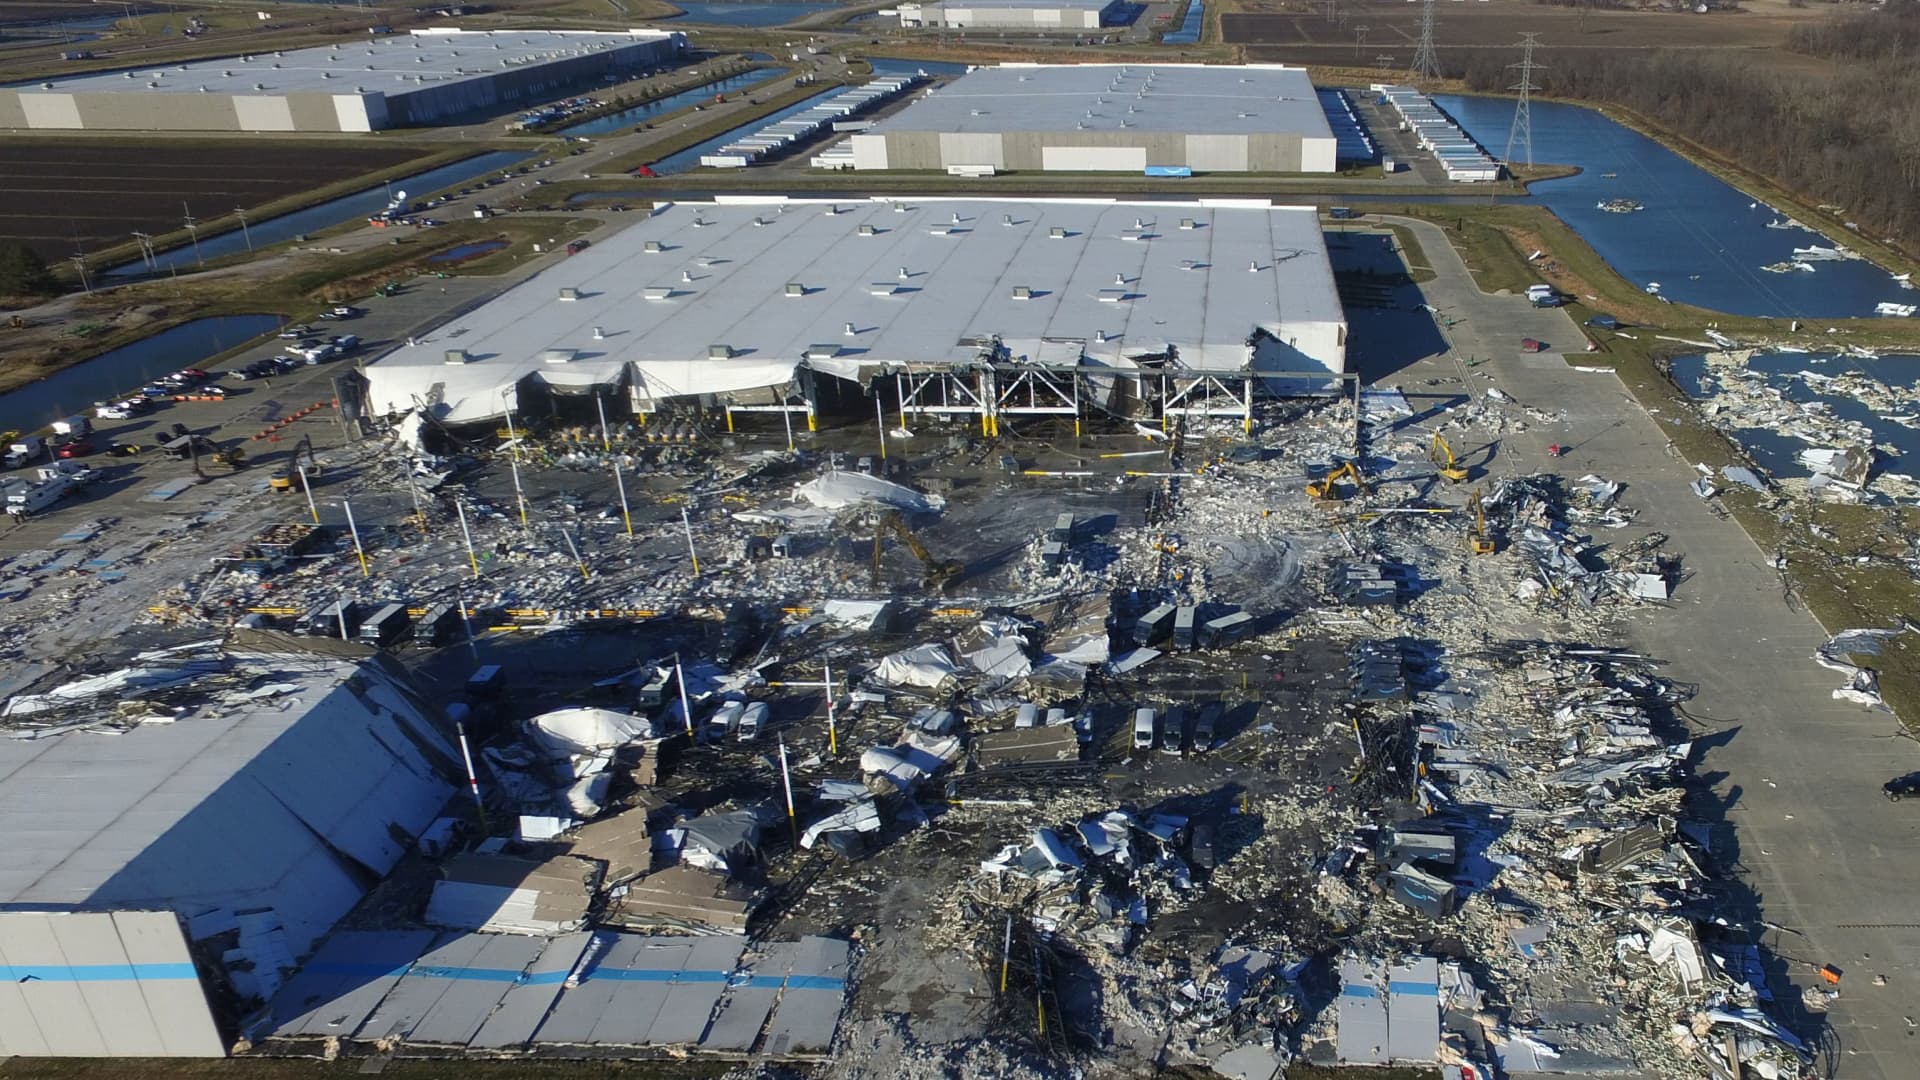 Amazon warehouse in Illinois hit by tornado, killing 6